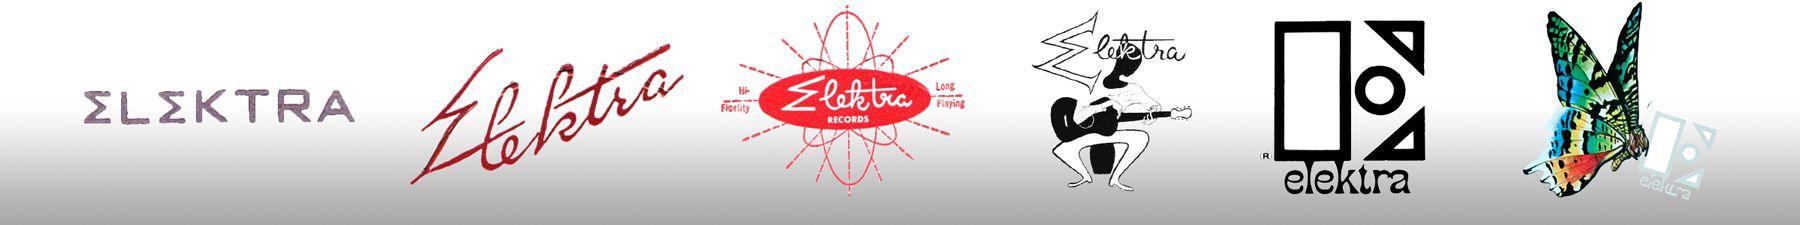 Elektra Logo - Elektra Records Master Discography :: Home